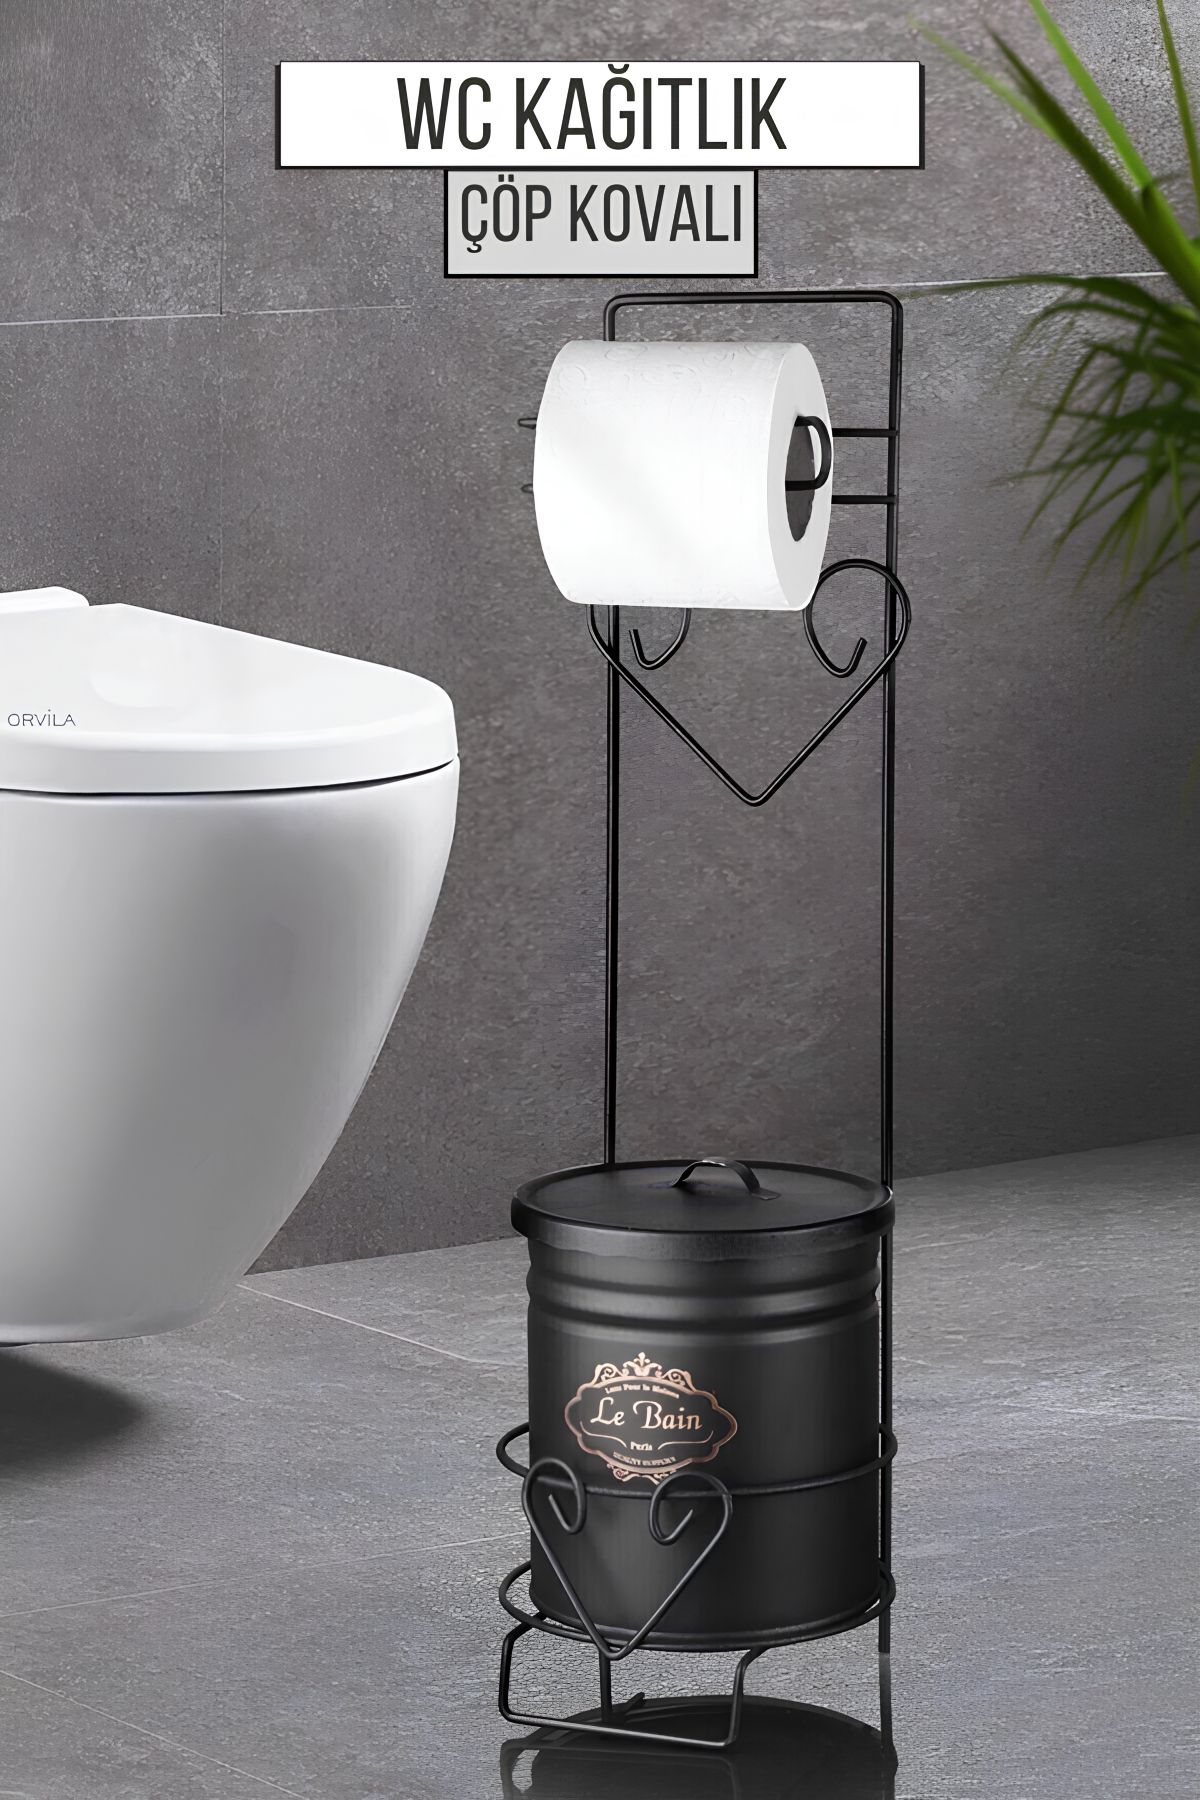 Orvila Lüx Çöp Kovalı Banyo Wc Kağıtlık Siyah - Tuvalet Kağıtlığı